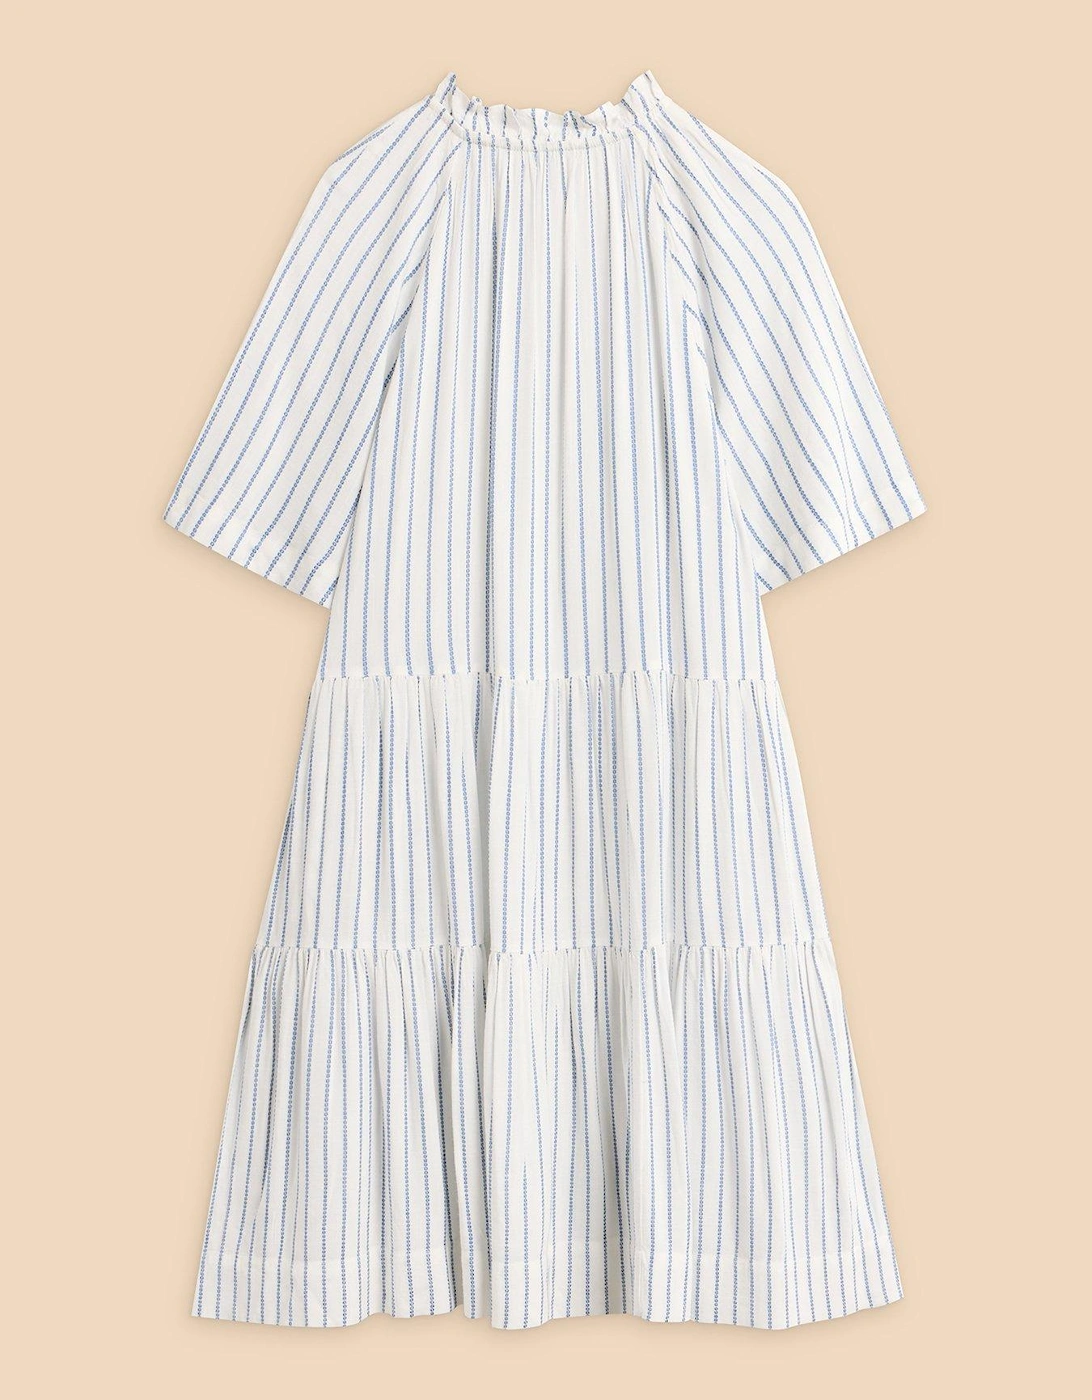 Sophia Stripe Dress - Cream/Blue